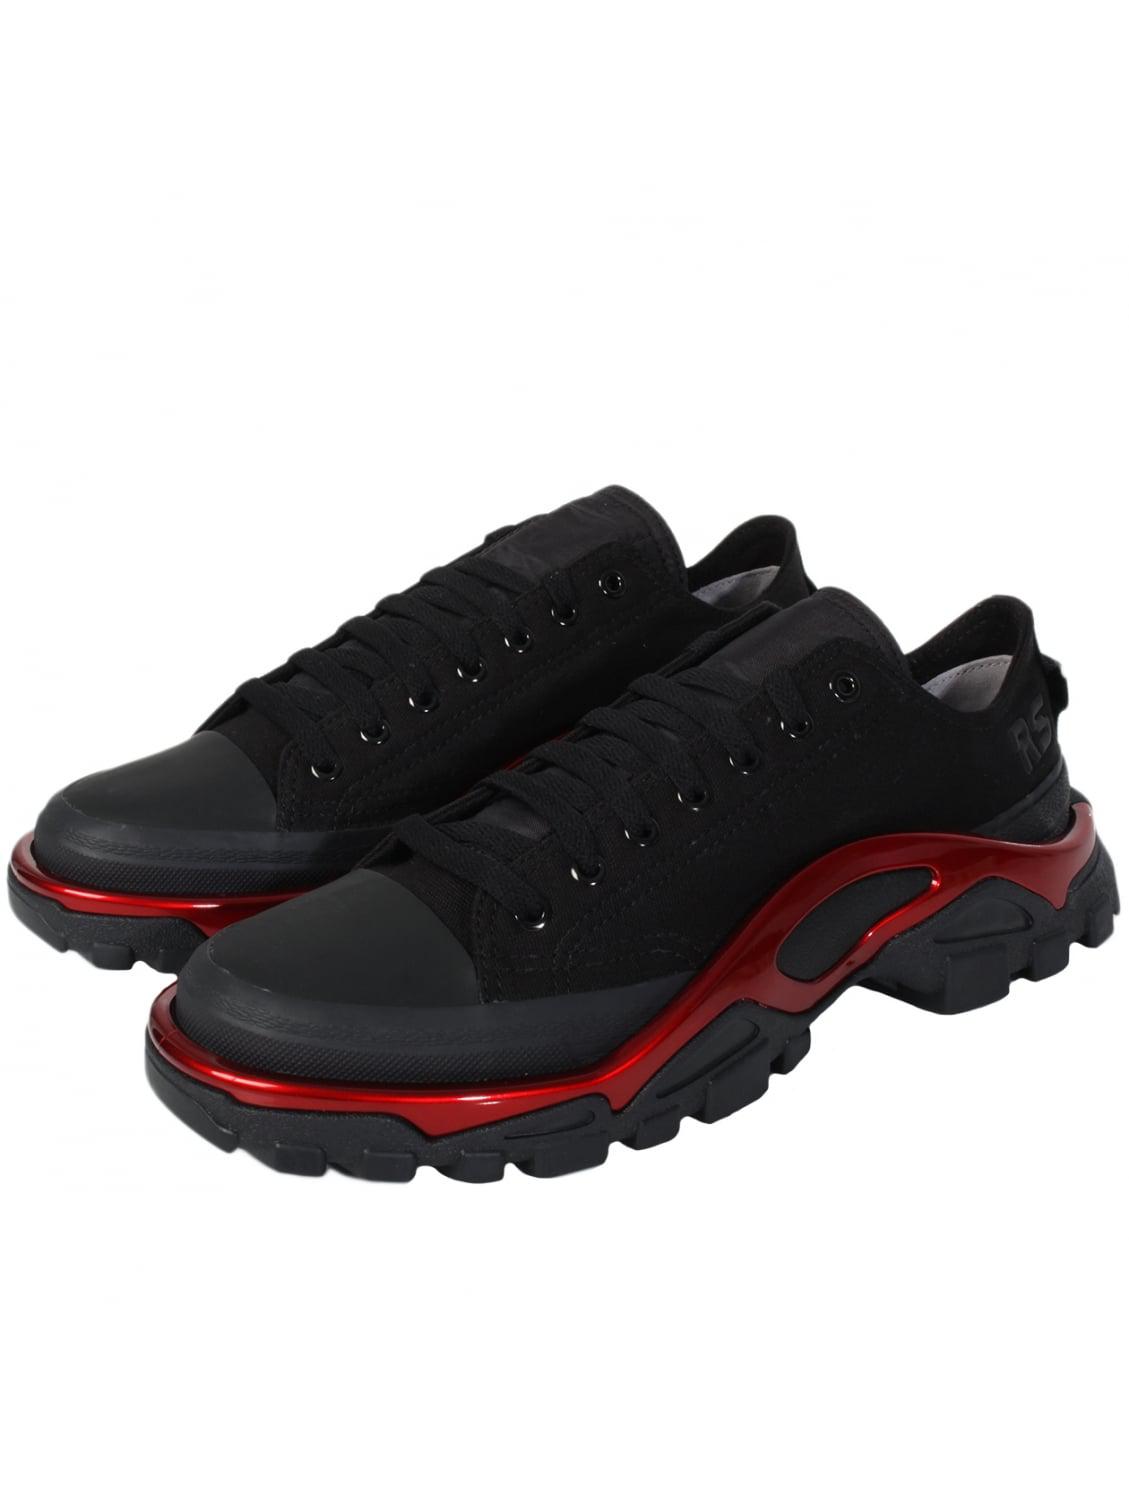 Raf Simons Canvas Rs New Runner Sneakers Black/red for Men